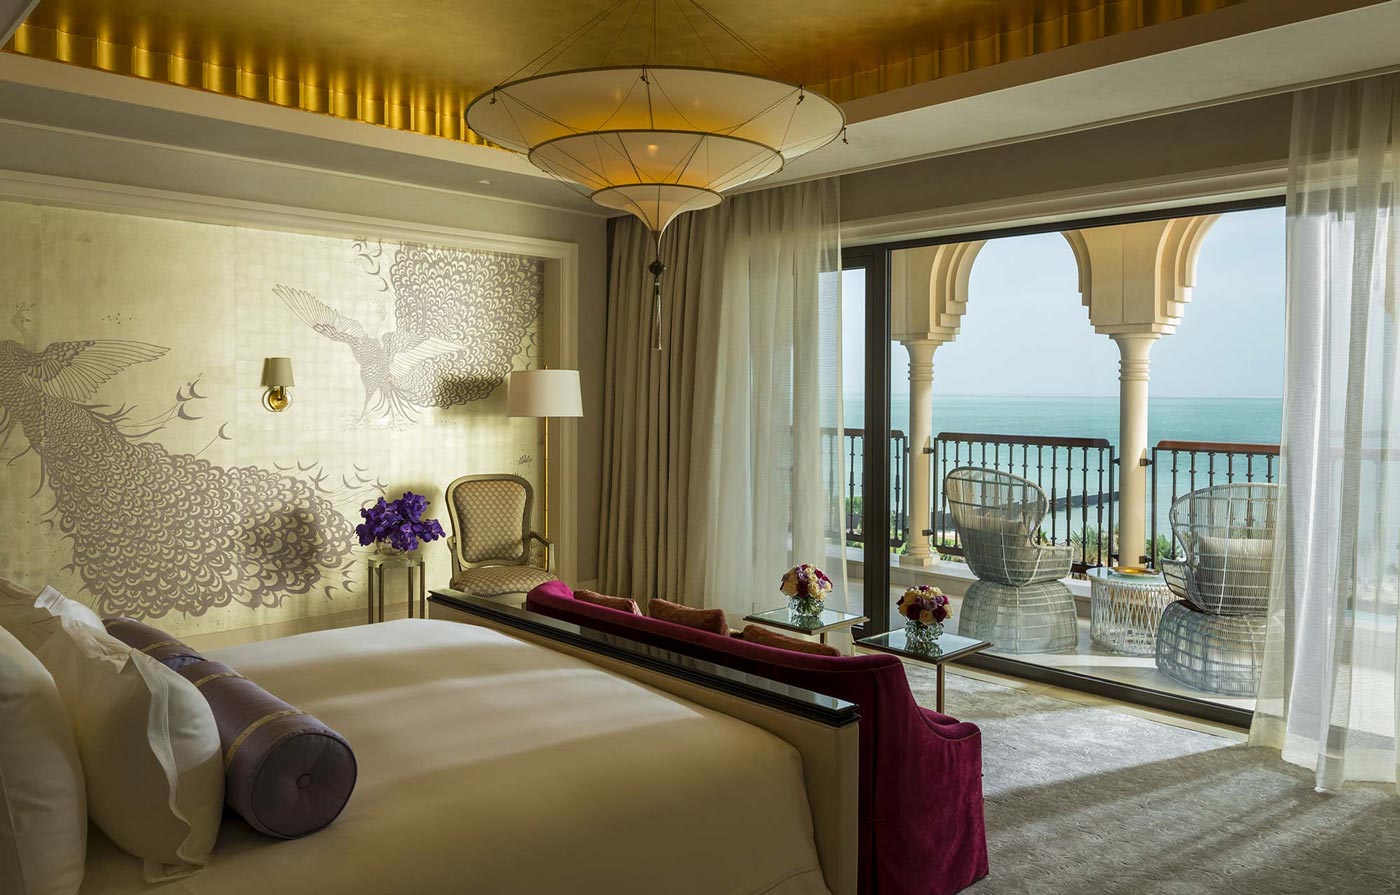 Lampada in seta Scheherazade 3 dischi senza decorazioni nell'Hotel Four Seasons Resort Hotel a Dubai, camera matrimoniale Royal Suite